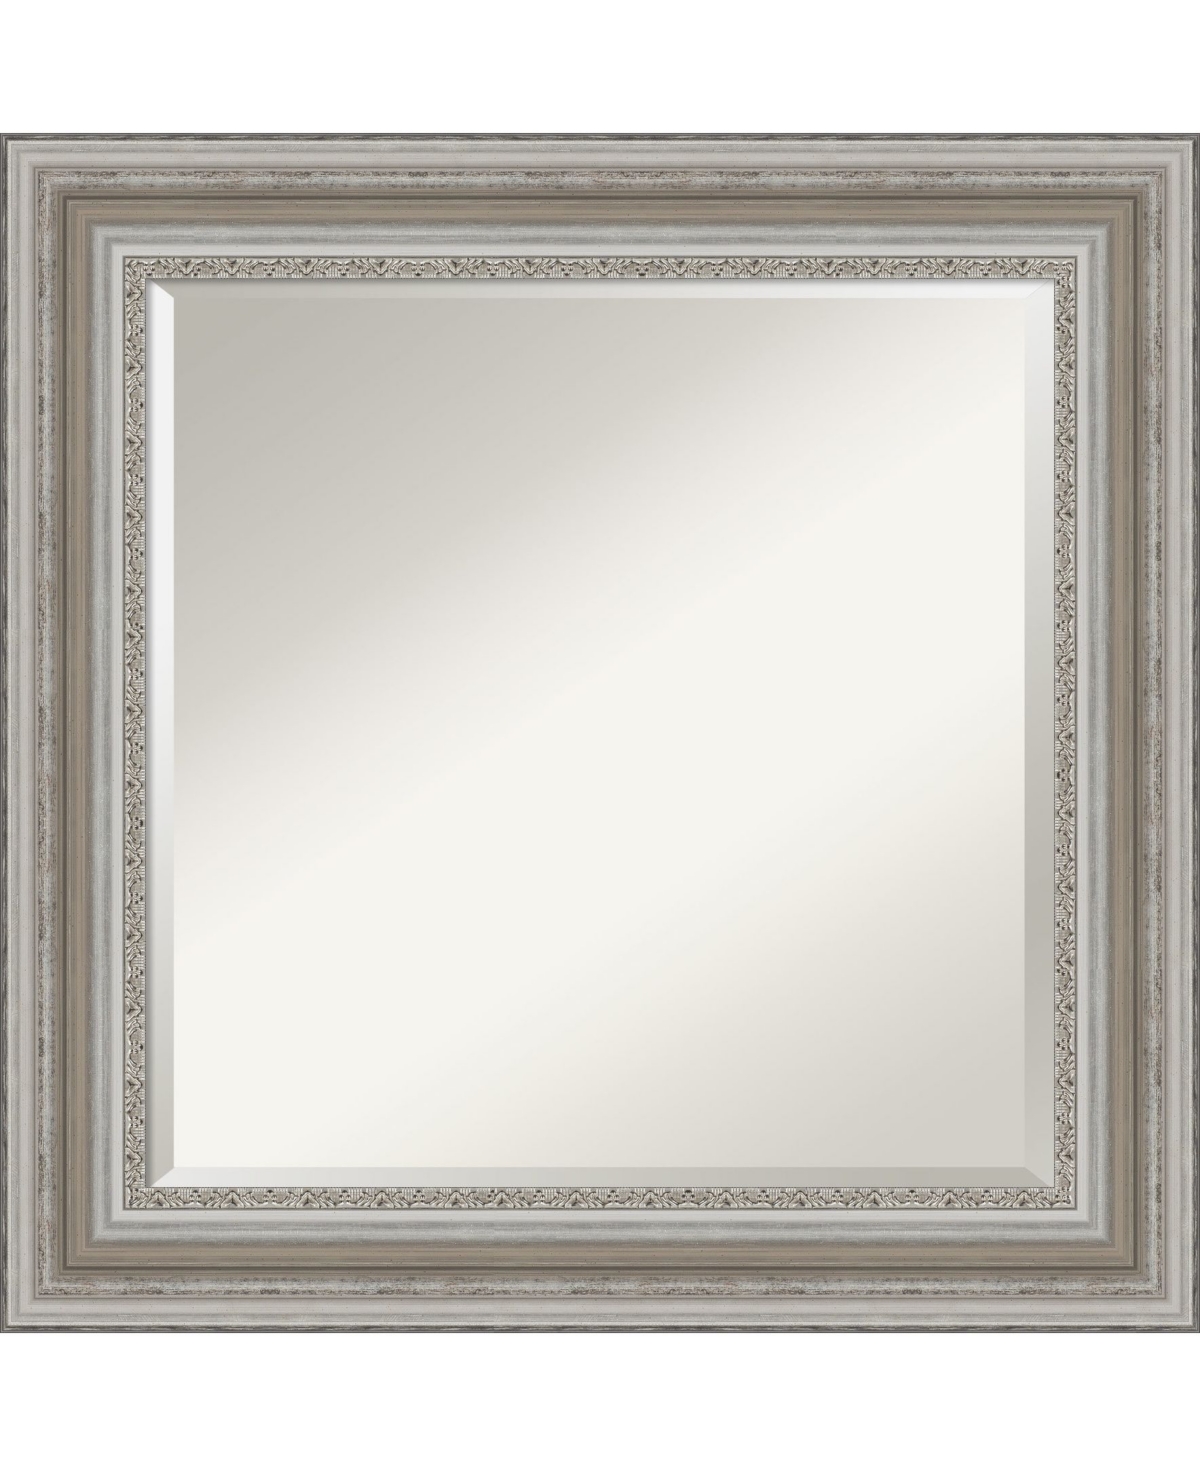 Parlor Silver-tone Framed Bathroom Vanity Wall Mirror, 25.5" x 25.50" - Silver